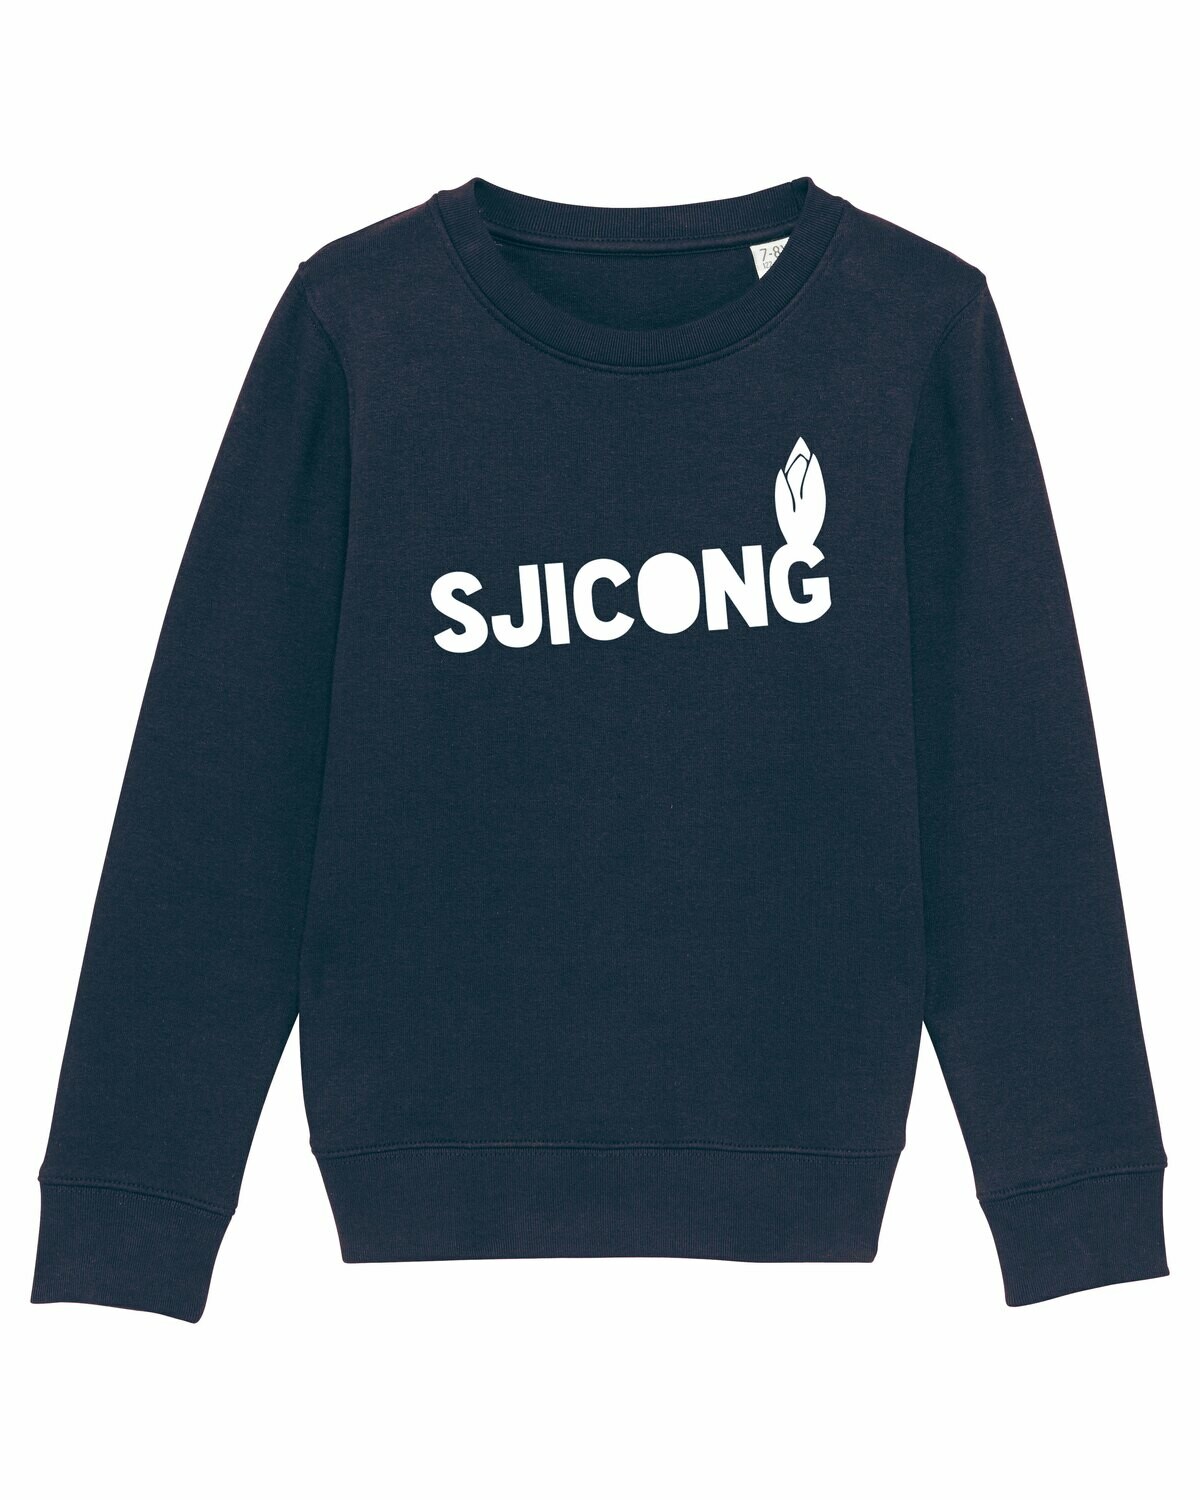 Kids Sweater Sjicong